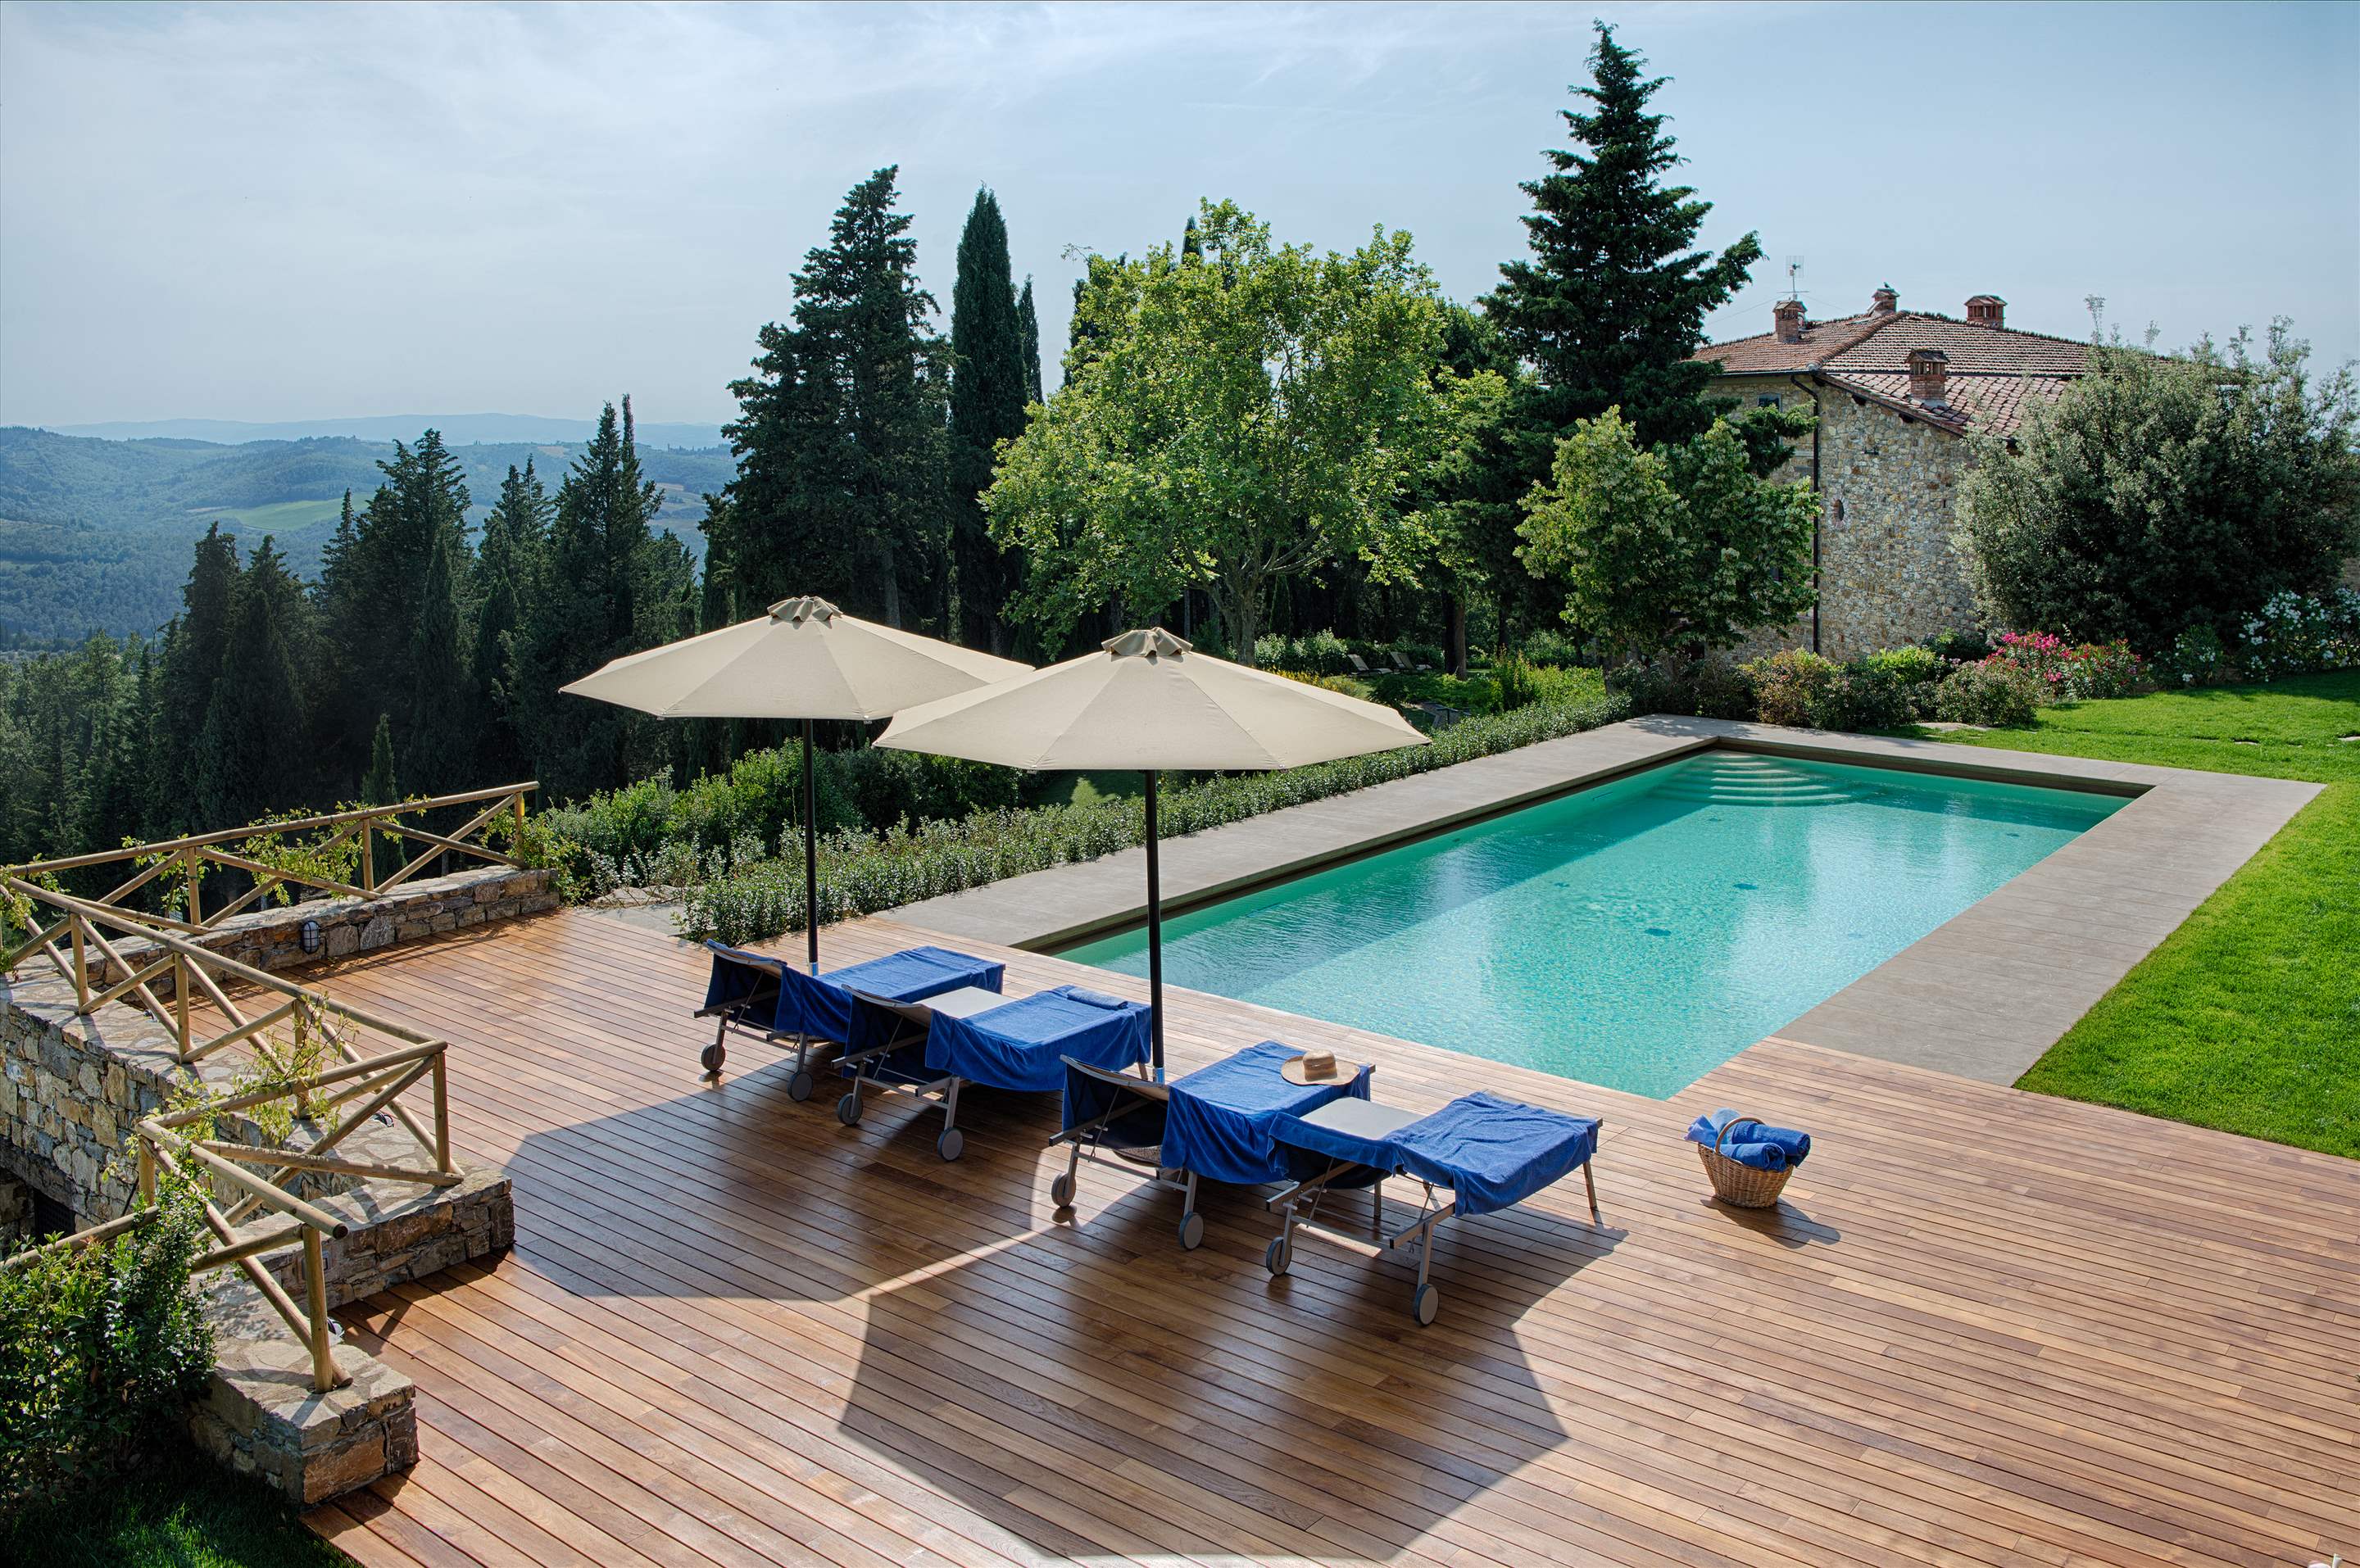 Villa La Valetta, Hotel Bedroom 2 persons, 1 bedroom villa in Chianti & Countryside, Tuscany Photo #1